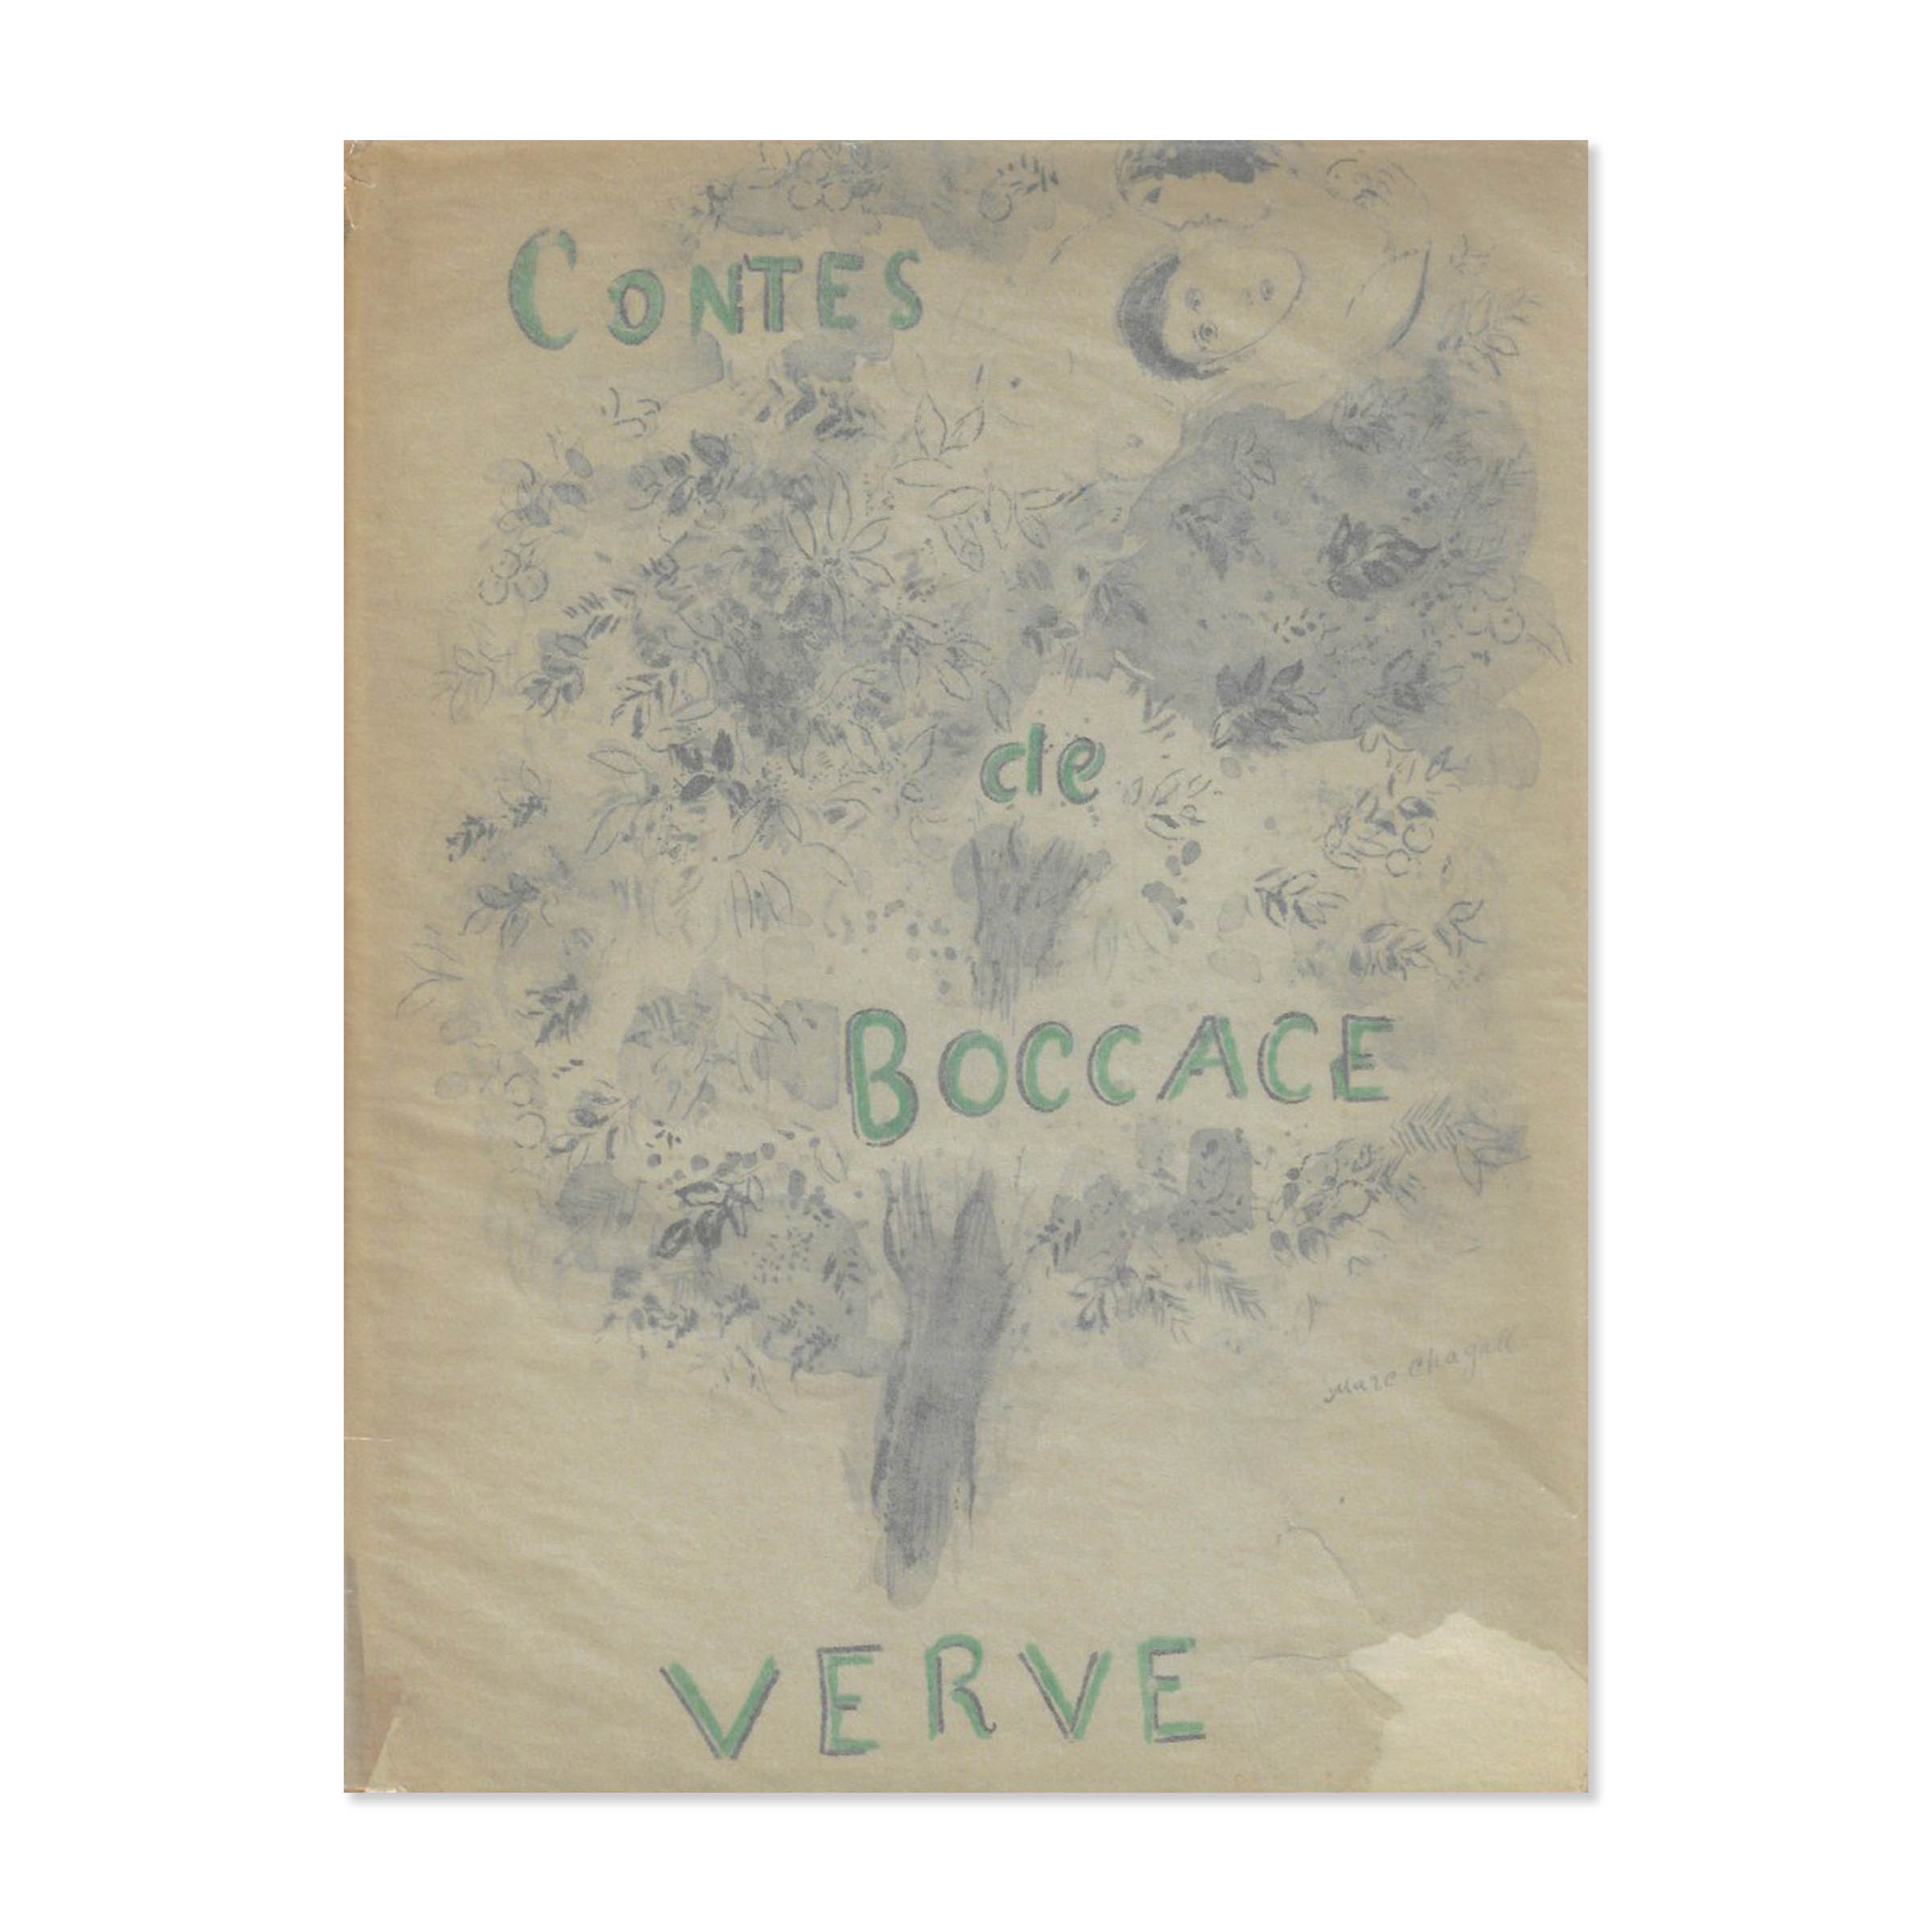 Verve 24 Contes de Boccace. Cover